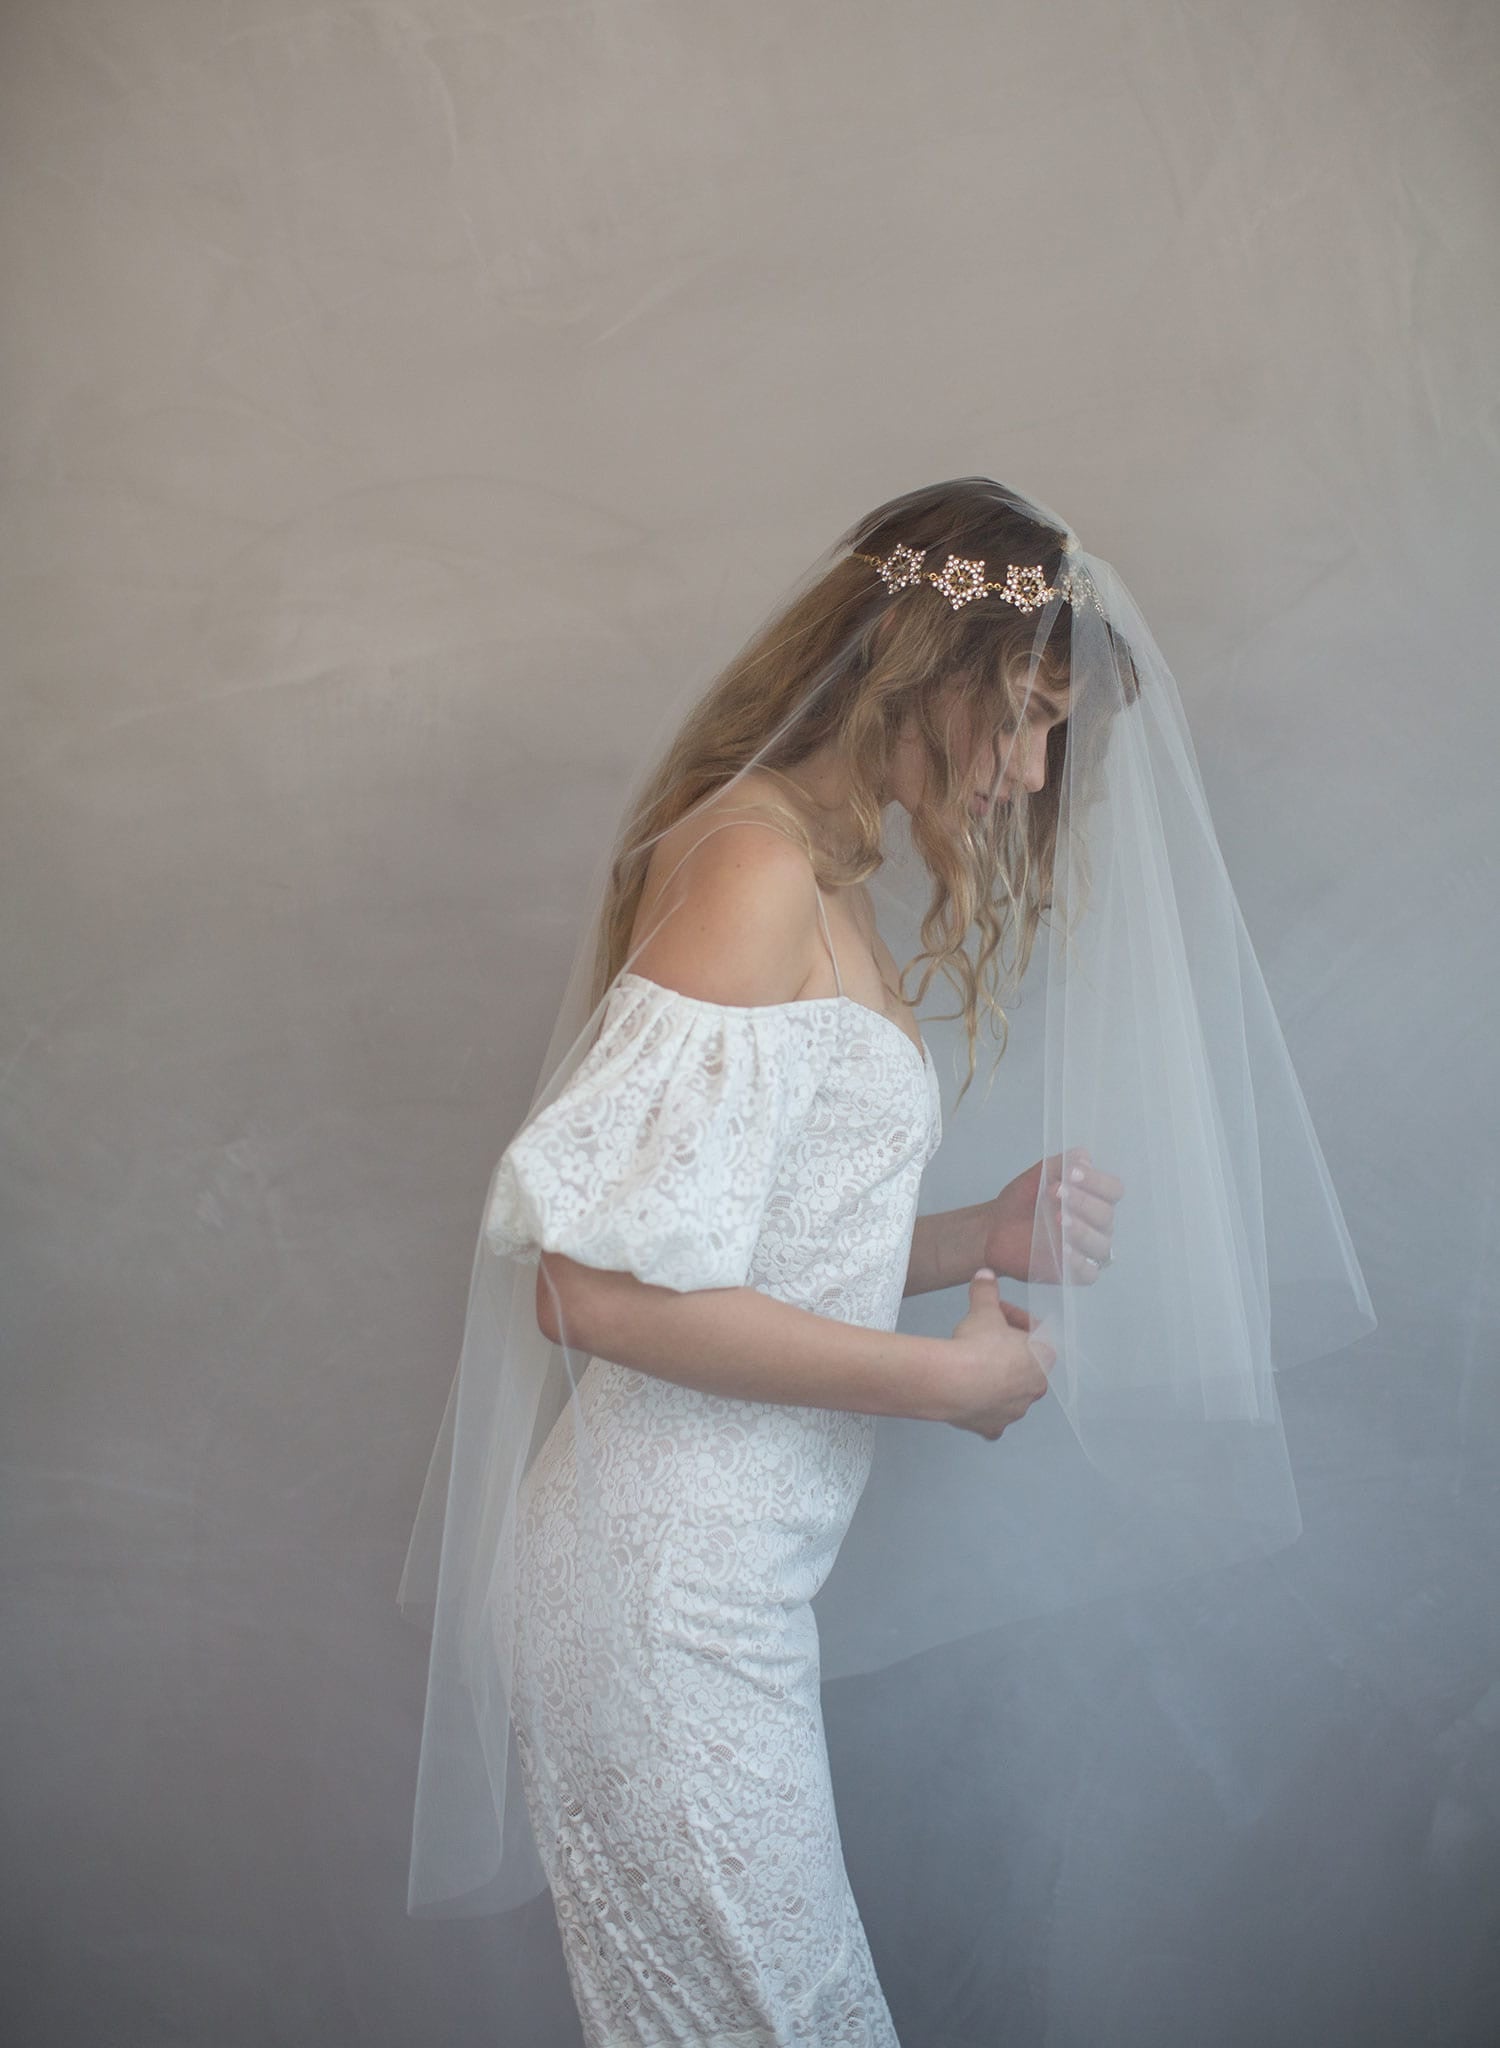 45 Pretty Mini Veils To Complete The Bridal Look - Weddingomania